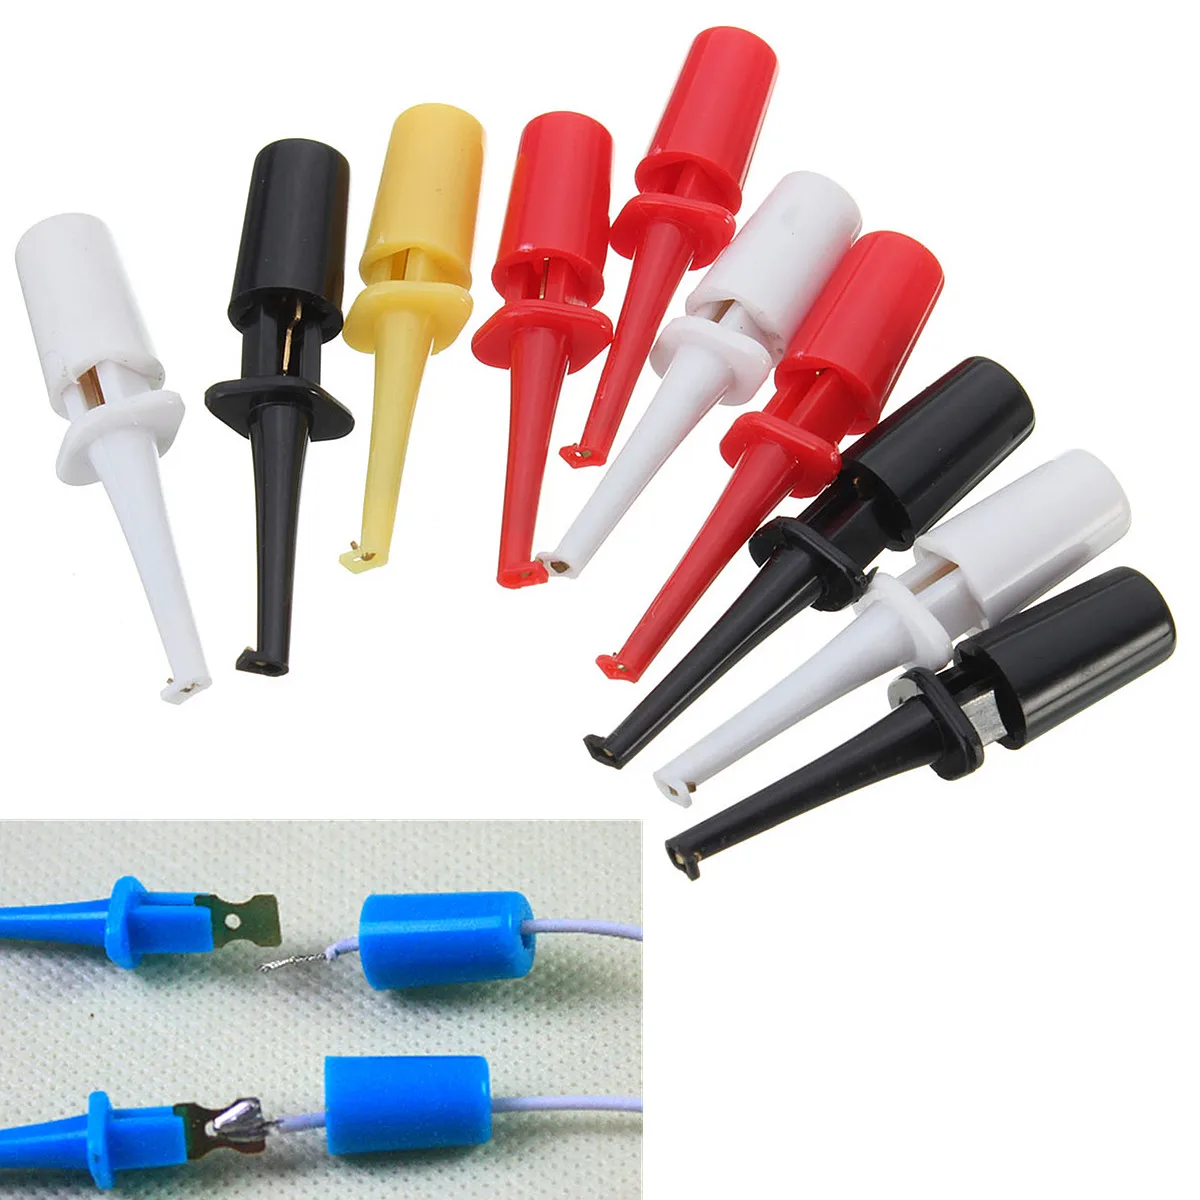 Details about   10x Multimeter Lead Wire Kit Test Hook Clip Grabbers Test SMD SMT Probe BEST 